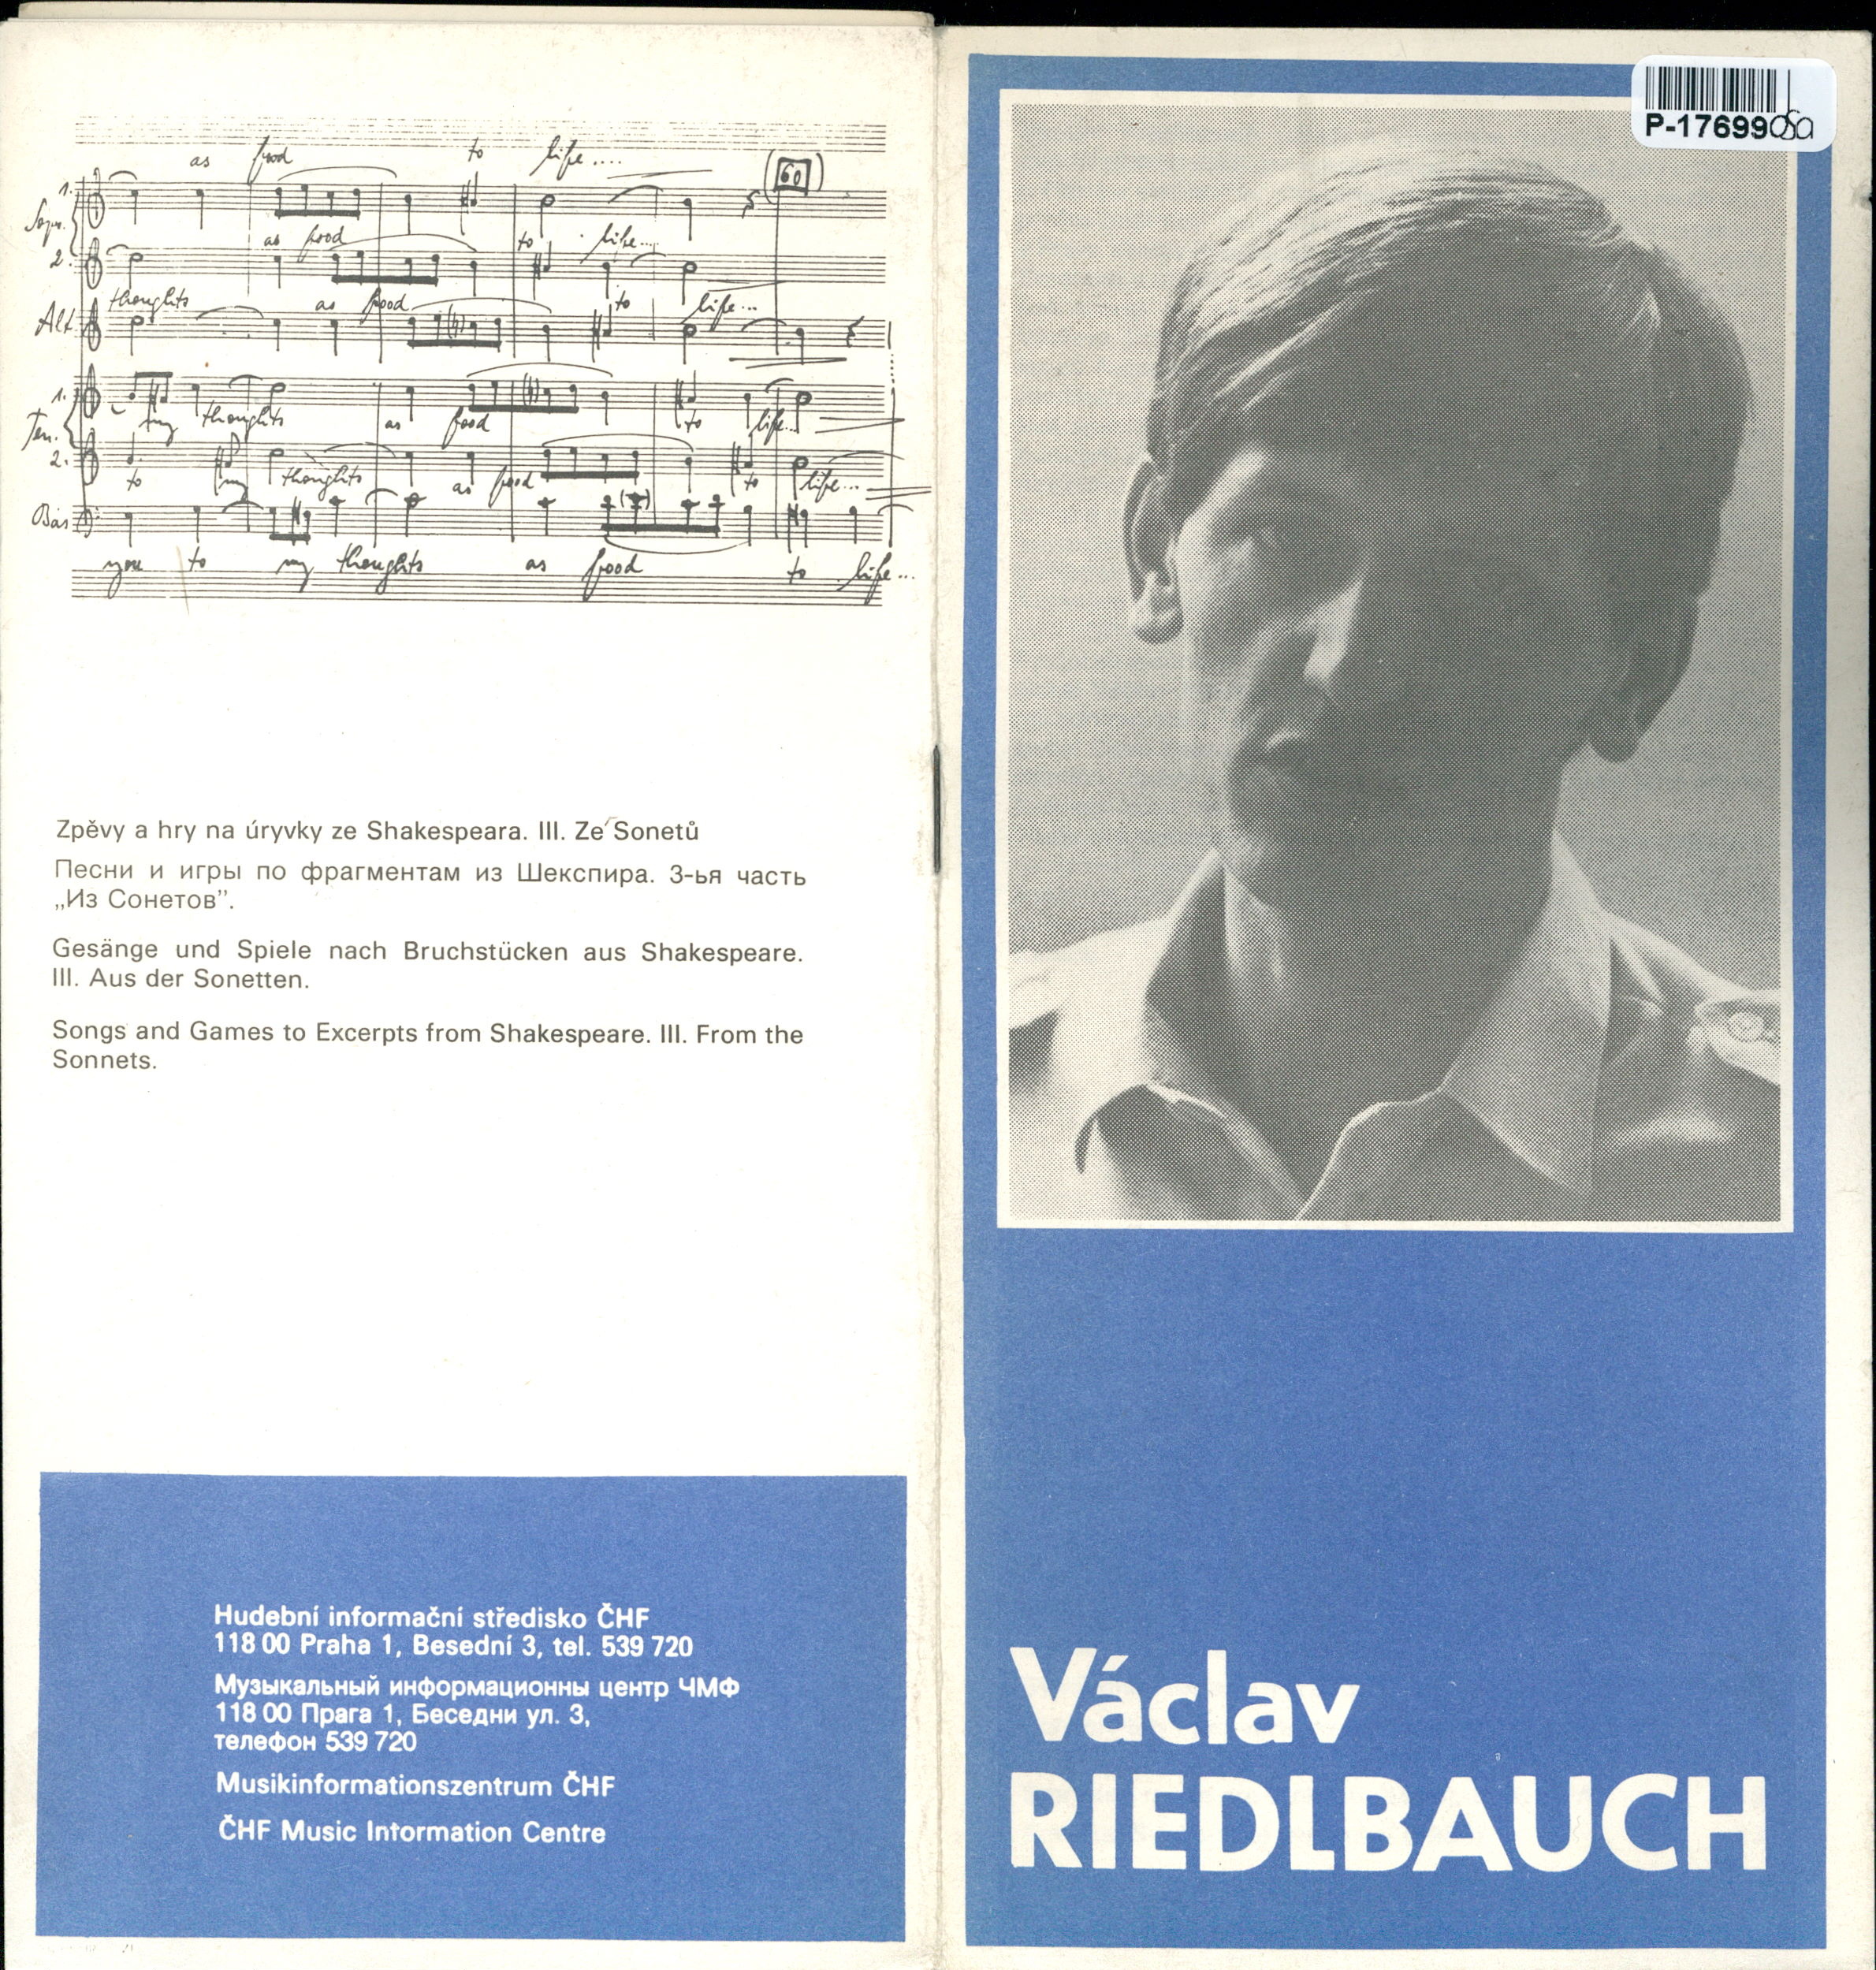 Václav Riedlabauch